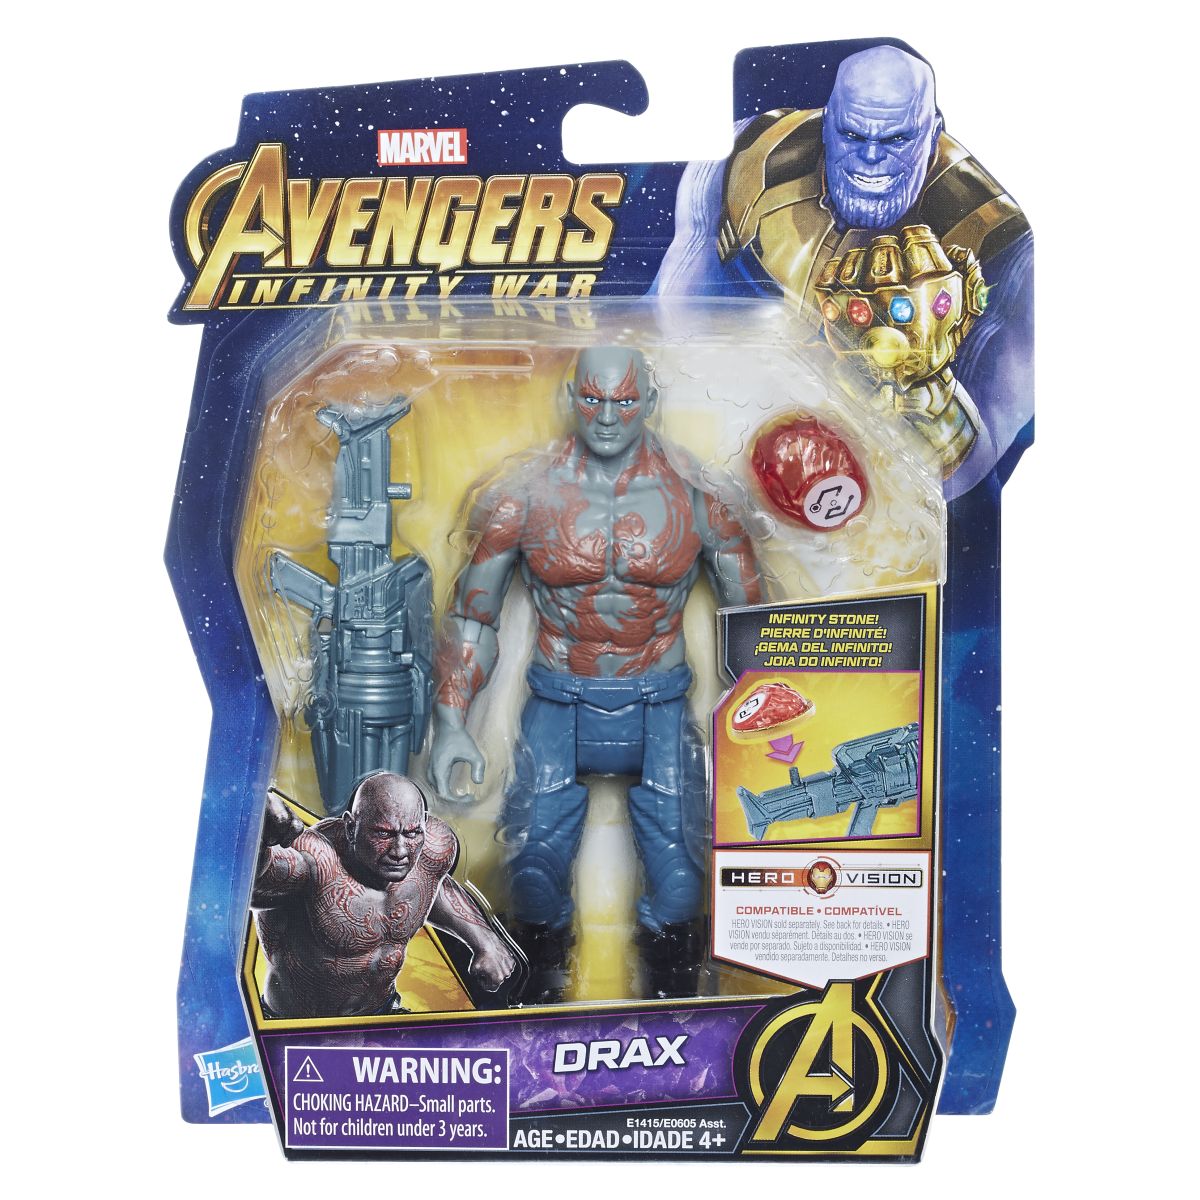 Marvel Avengers Infinity War 6 Inch Figure Assortment Drax In Pkg